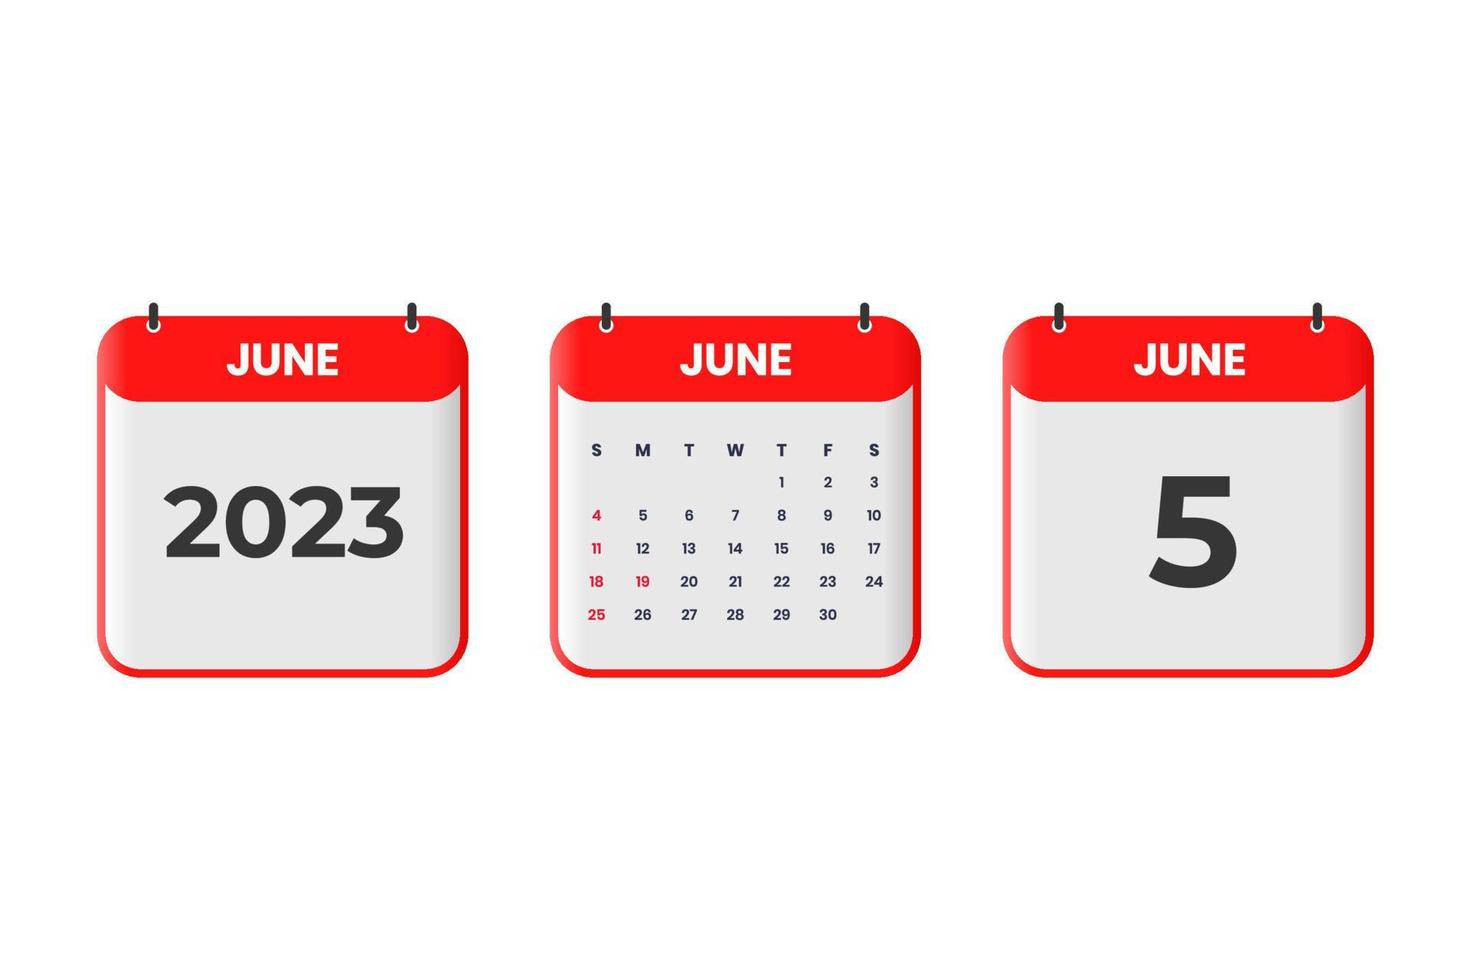 June 2023 calendar design. 5th June 2023 calendar icon for schedule, appointment, important date concept vector